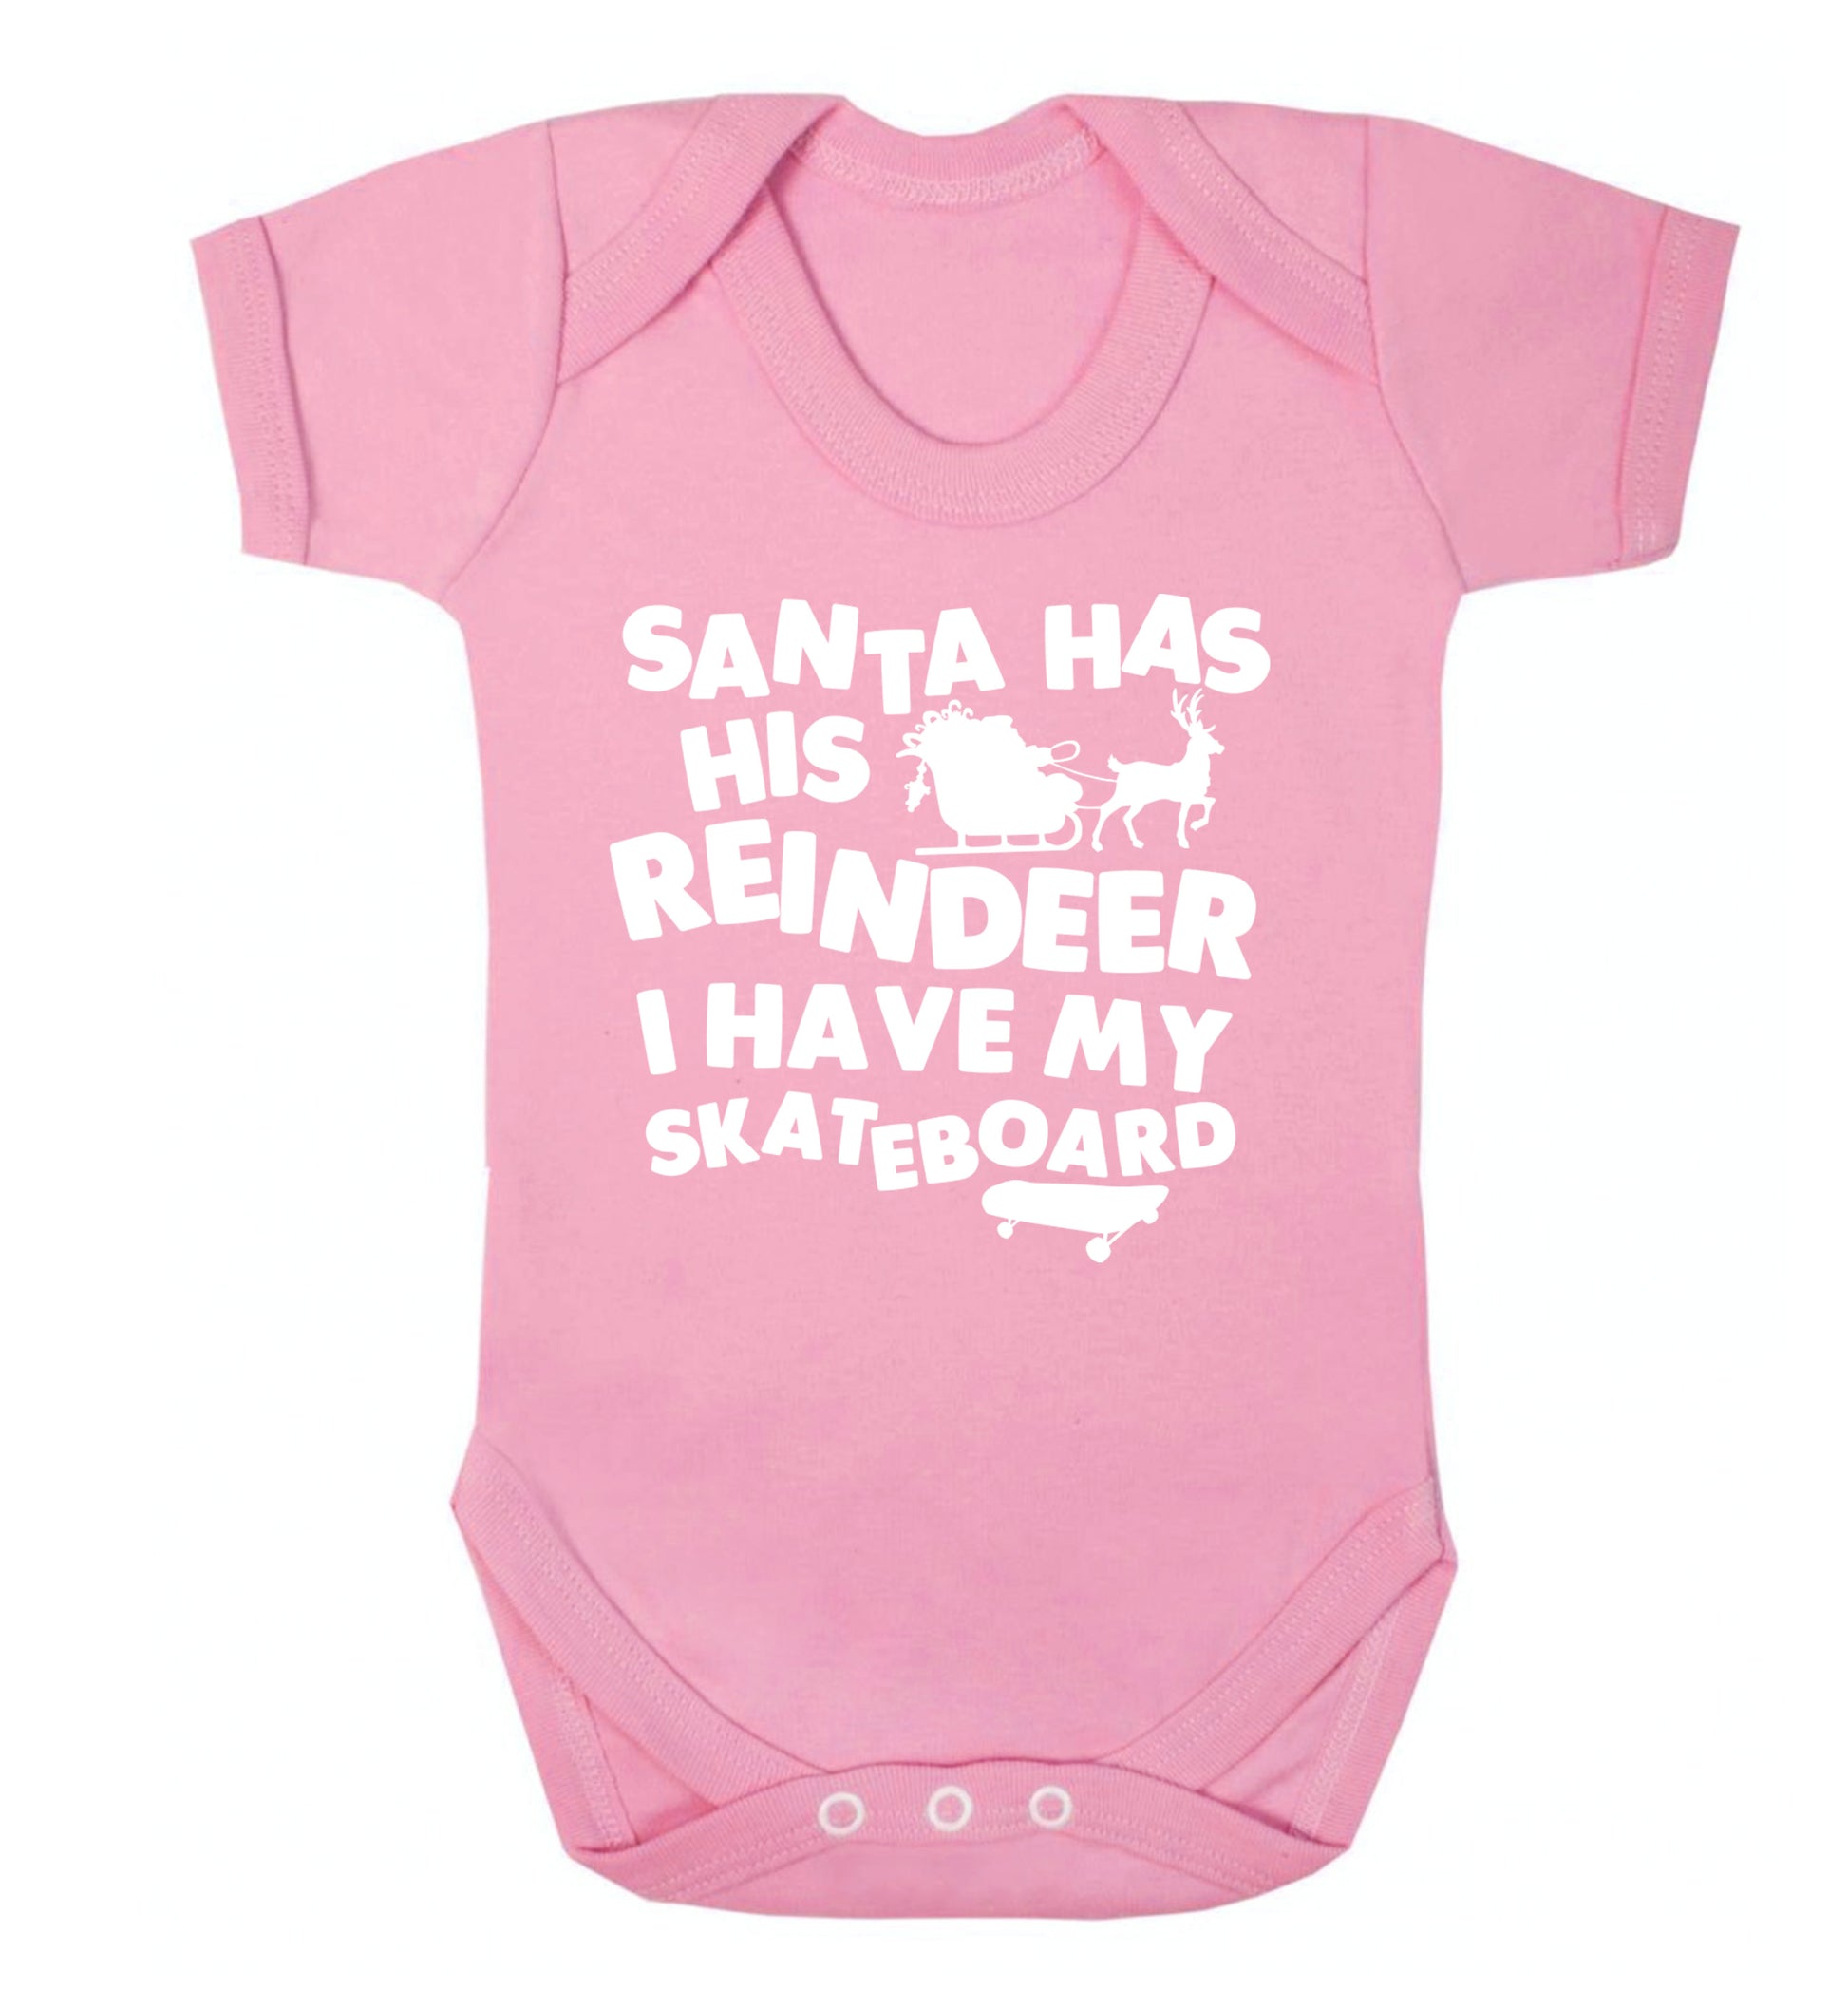 Santa has his reindeer I have my skateboard Baby Vest pale pink 18-24 months